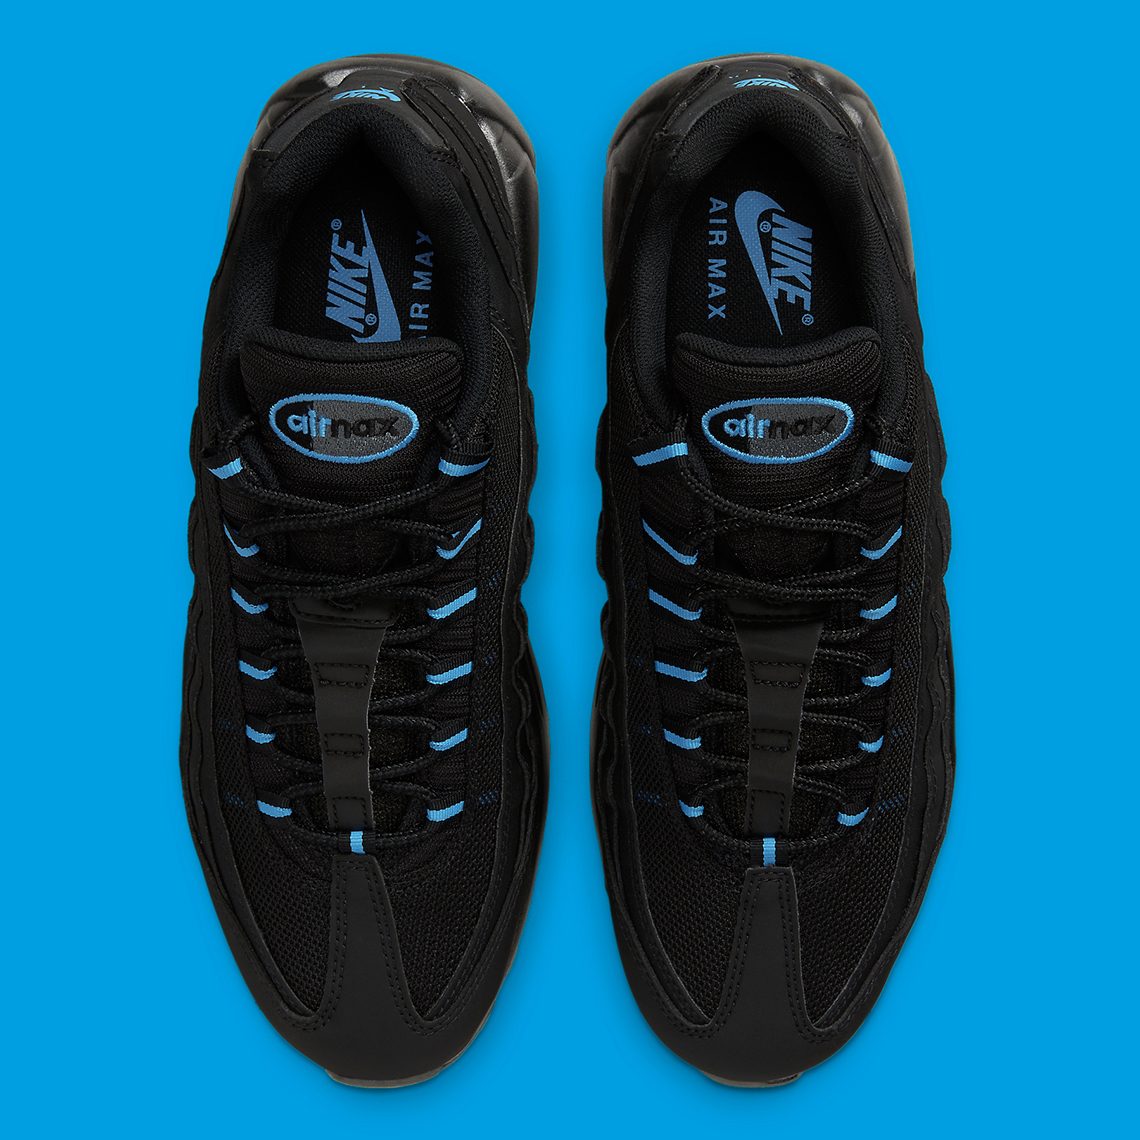 Air Max 95 "Black/University Blue" FJ4217-002 | SneakerNews.com